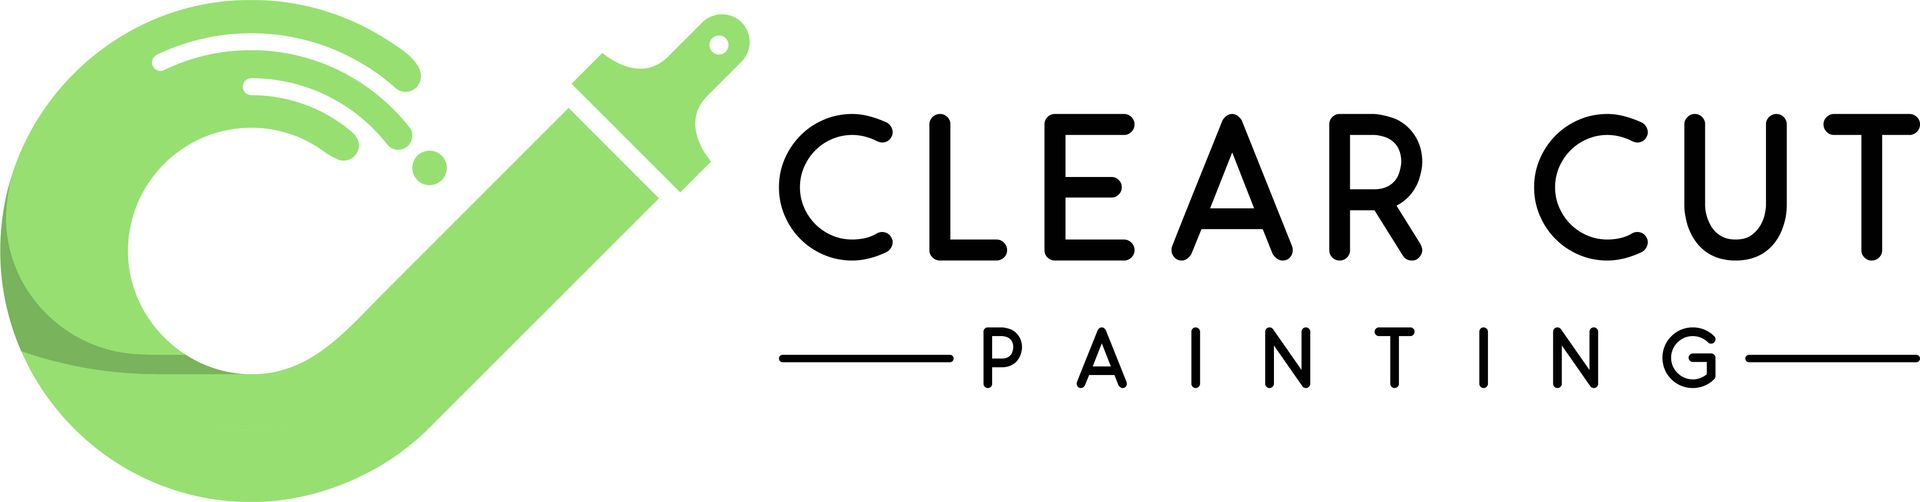 Clear Cut Painting logo. Company logo.